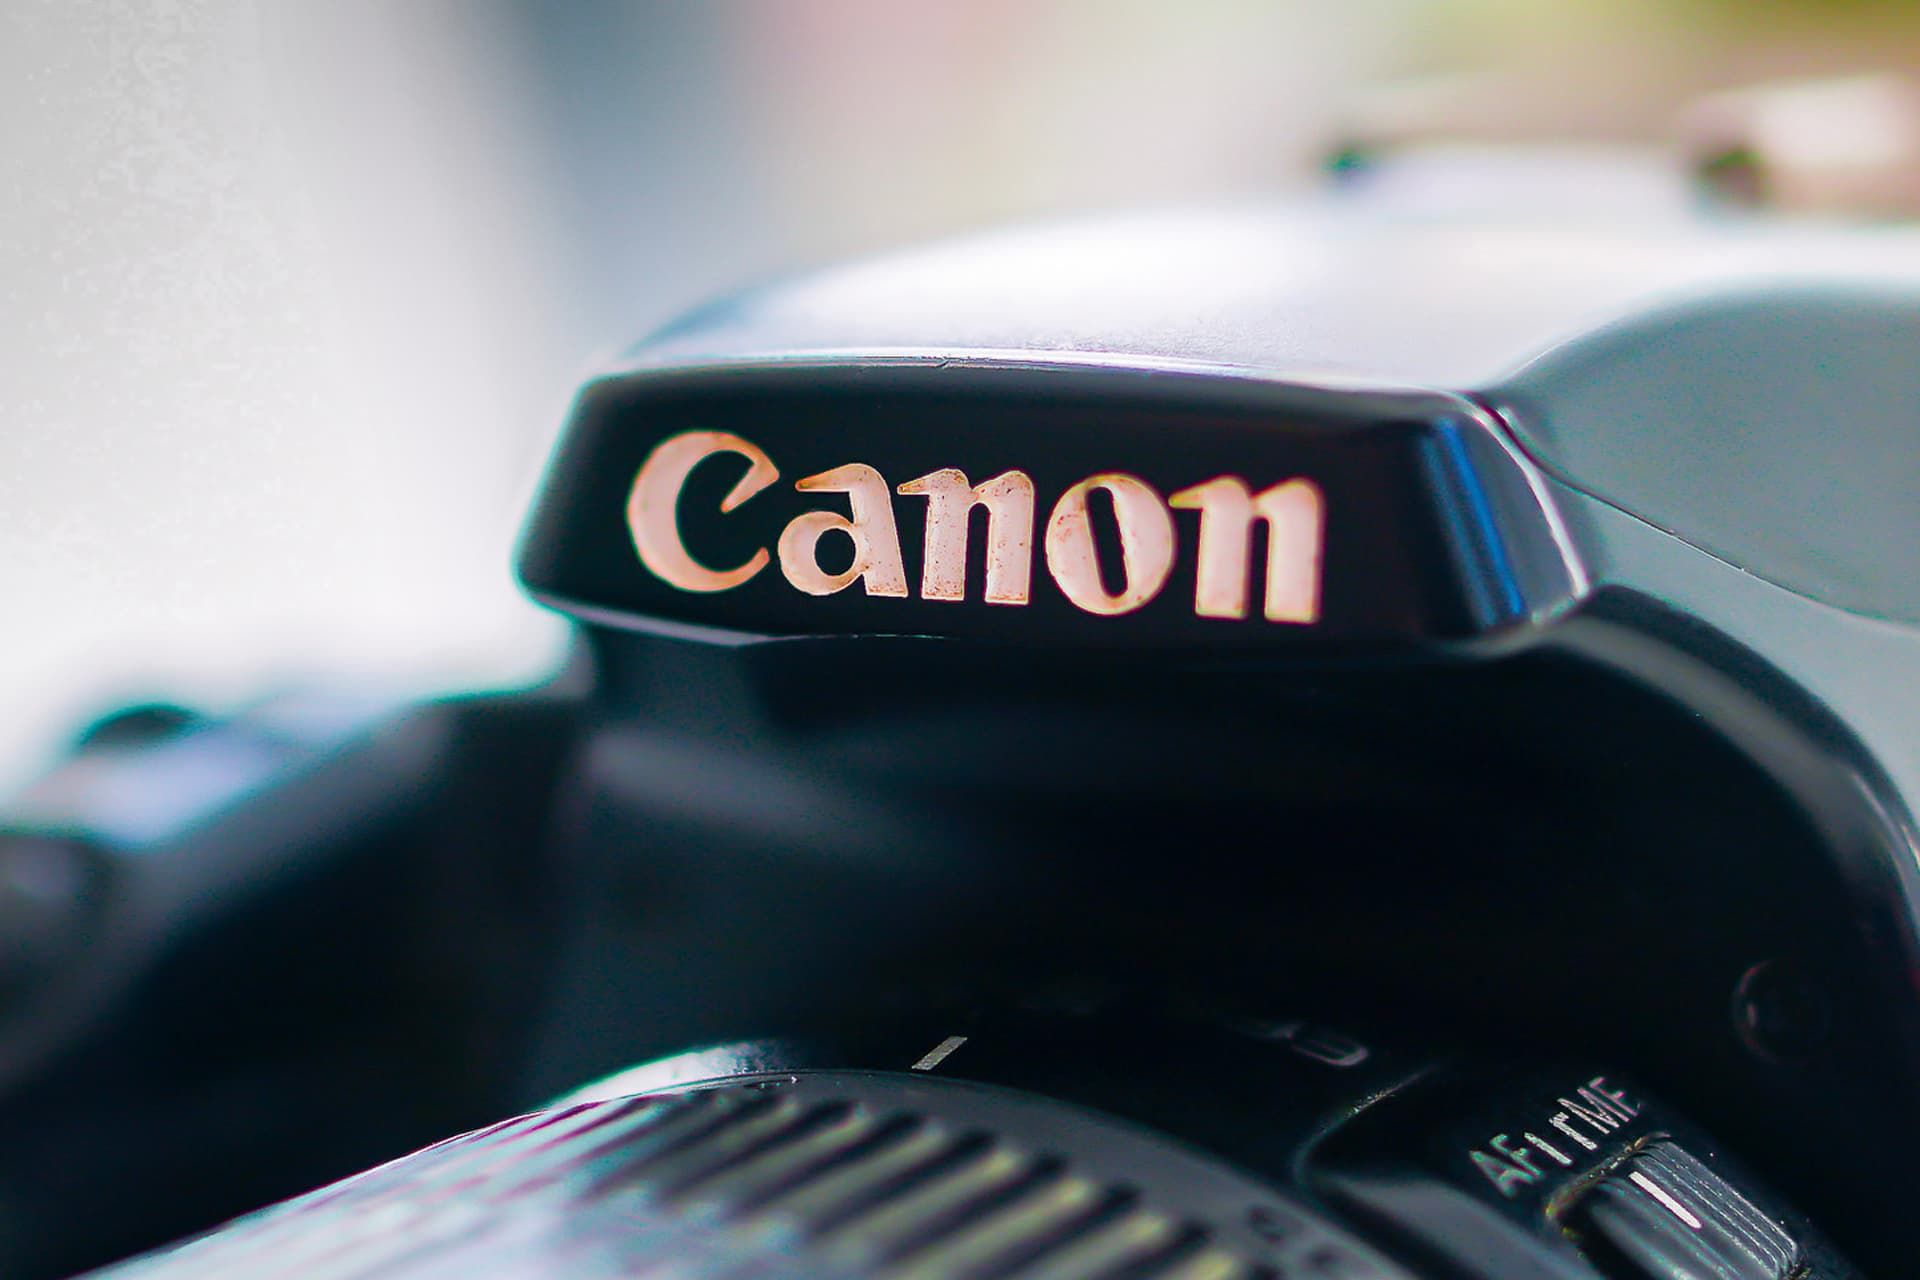 لوگو کانن روی دوربین Canon روز روشن